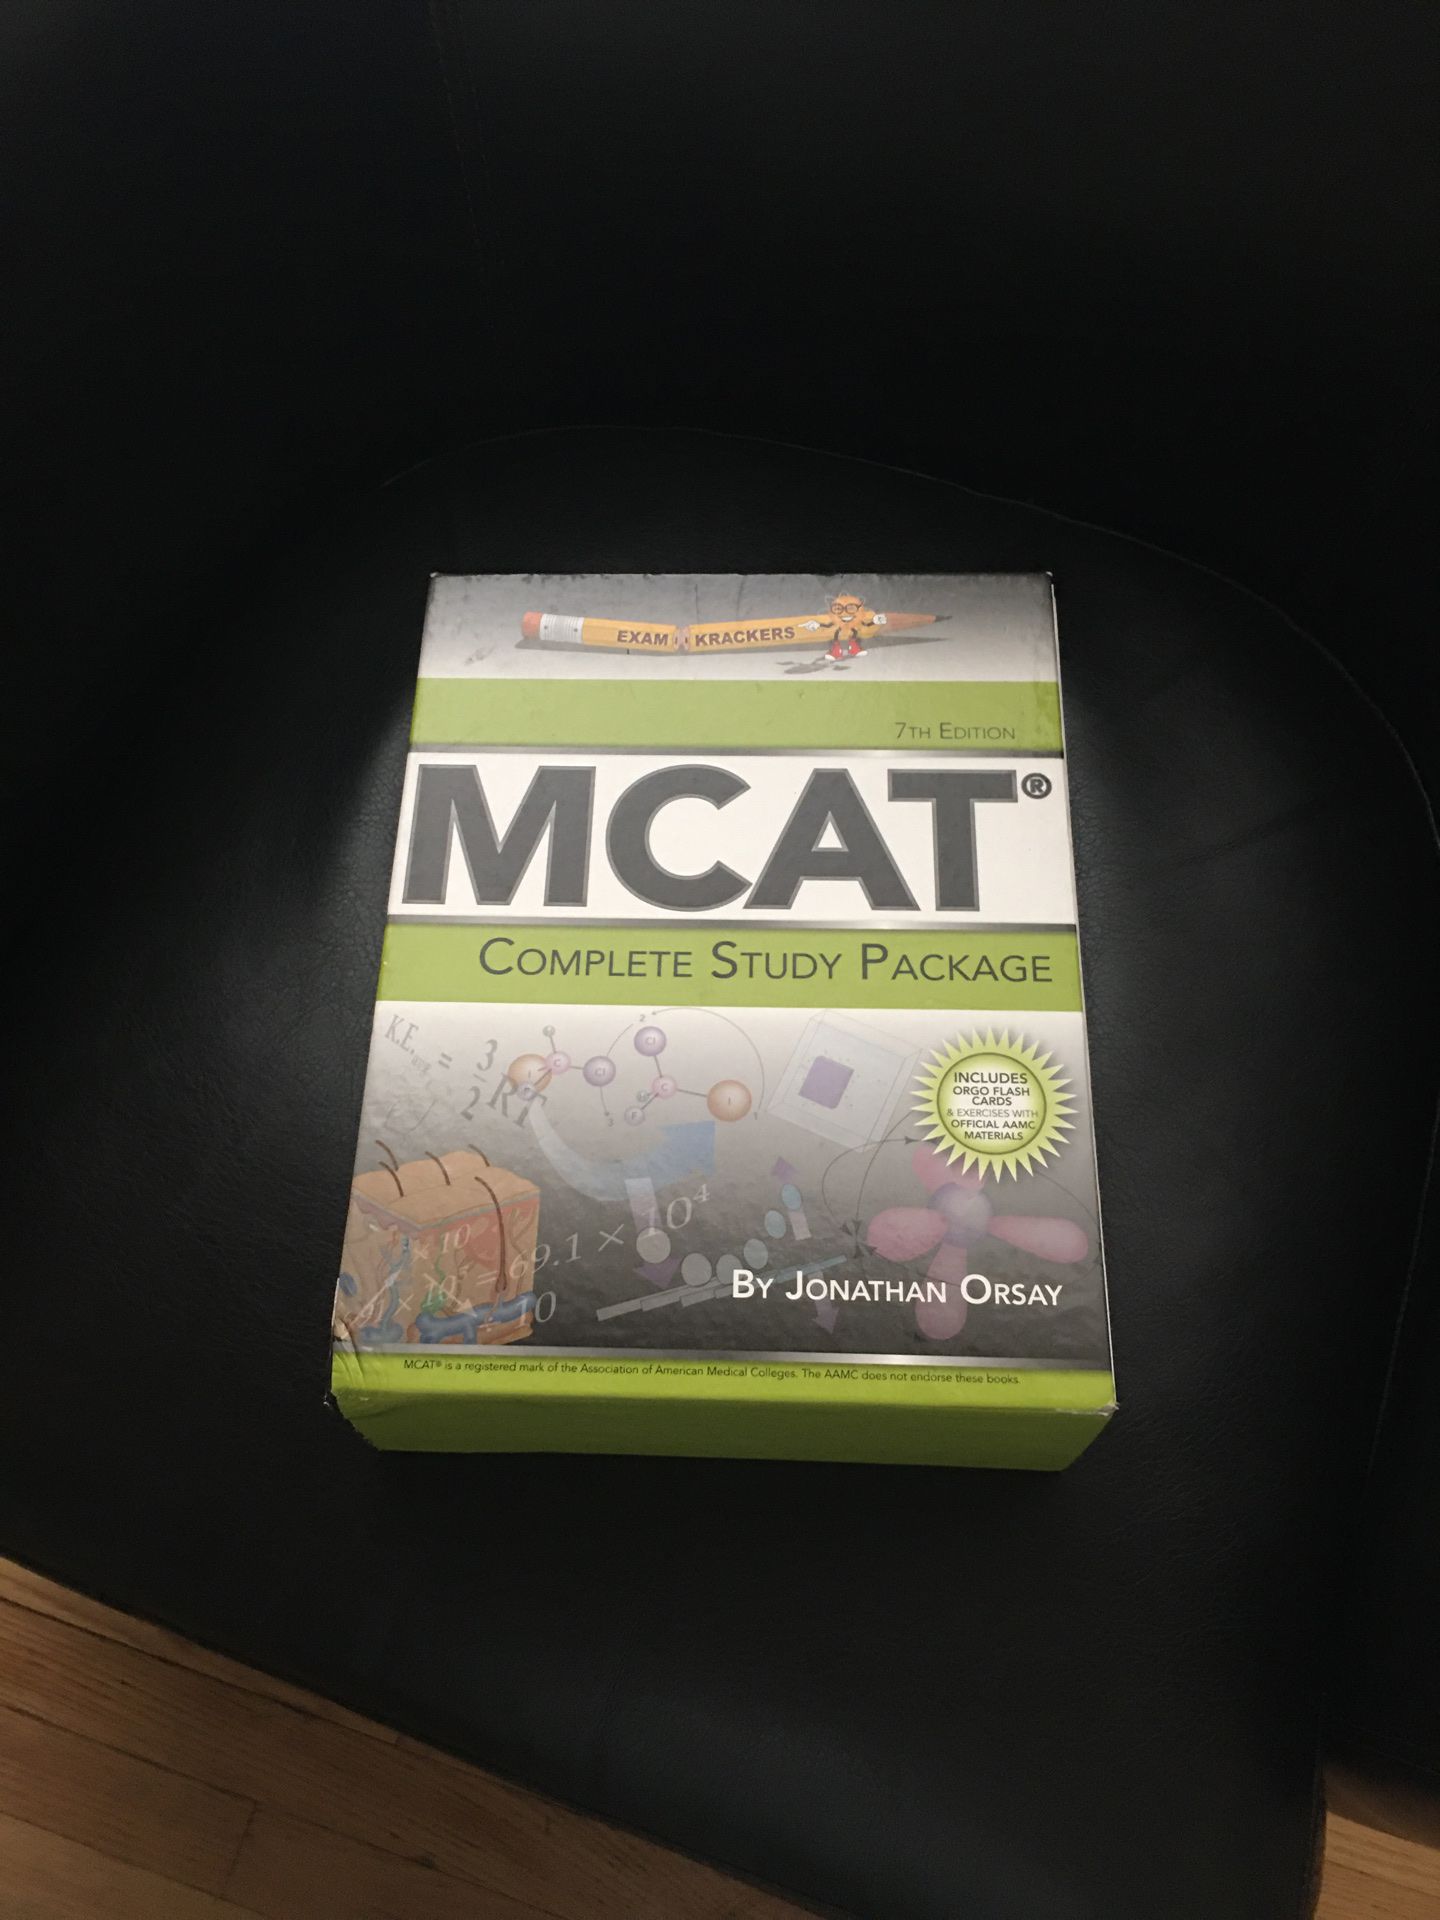 MCAT study package